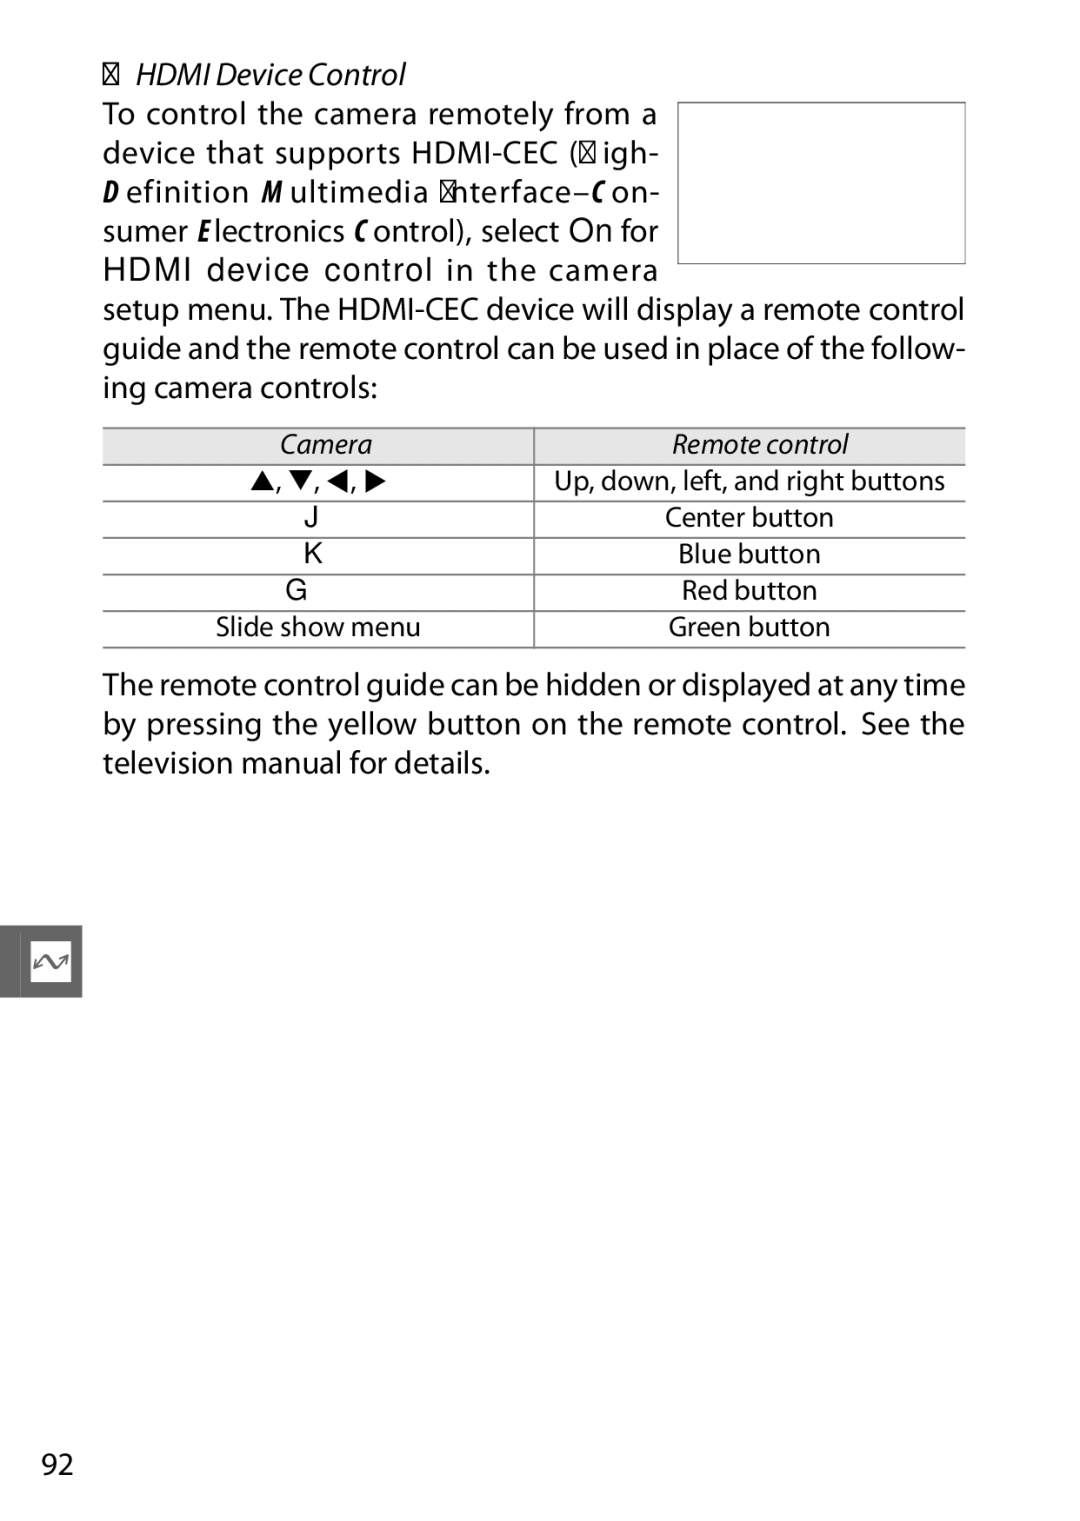 Nikon V1 manual Hdmi Device Control, Camera Remote control 